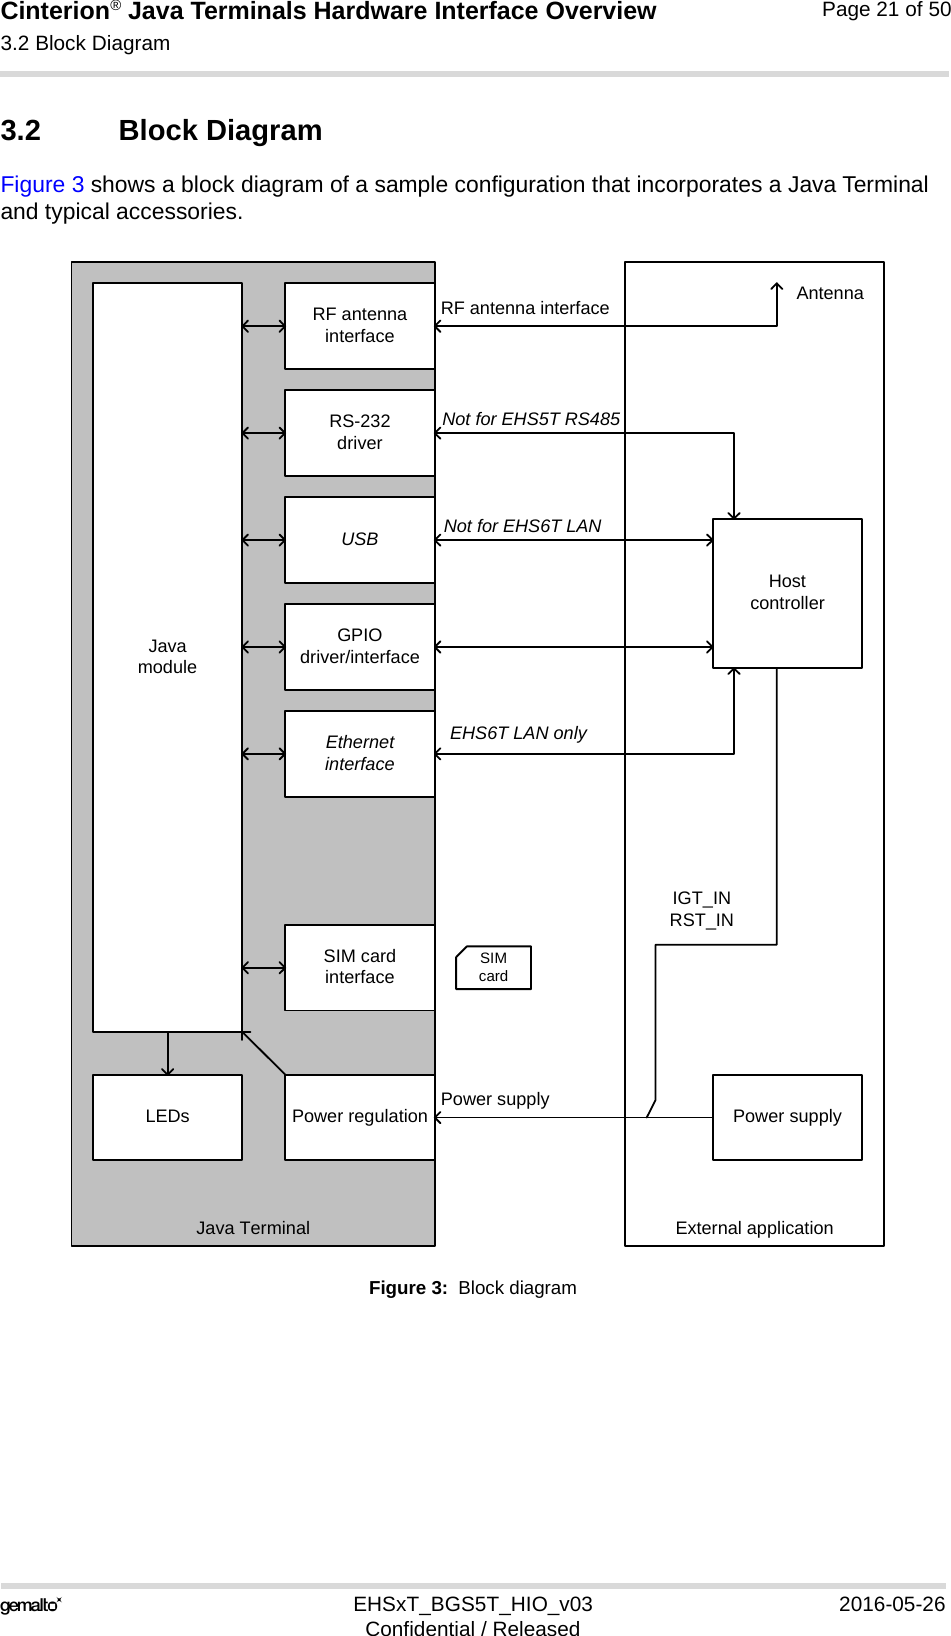 Cinterion® Java Terminals Hardware Interface Overview3.2 Block Diagram39EHSxT_BGS5T_HIO_v03 2016-05-26Confidential / ReleasedPage 21 of 503.2 Block DiagramFigure 3 shows a block diagram of a sample configuration that incorporates a Java Terminal and typical accessories.Figure 3:  Block diagramJava TerminalJavamoduleRS-232driverUSBSIM cardinterfacePower regulationRF antennainterfaceLEDsRF antenna interfaceHostcontrollerPower supplyExternal applicationPower supplySIMcardAntennaIGT_INRST_INGPIOdriver/interfaceEthernetinterfaceEHS6T LAN onlyNot for EHS6T LANNot for EHS5T RS485